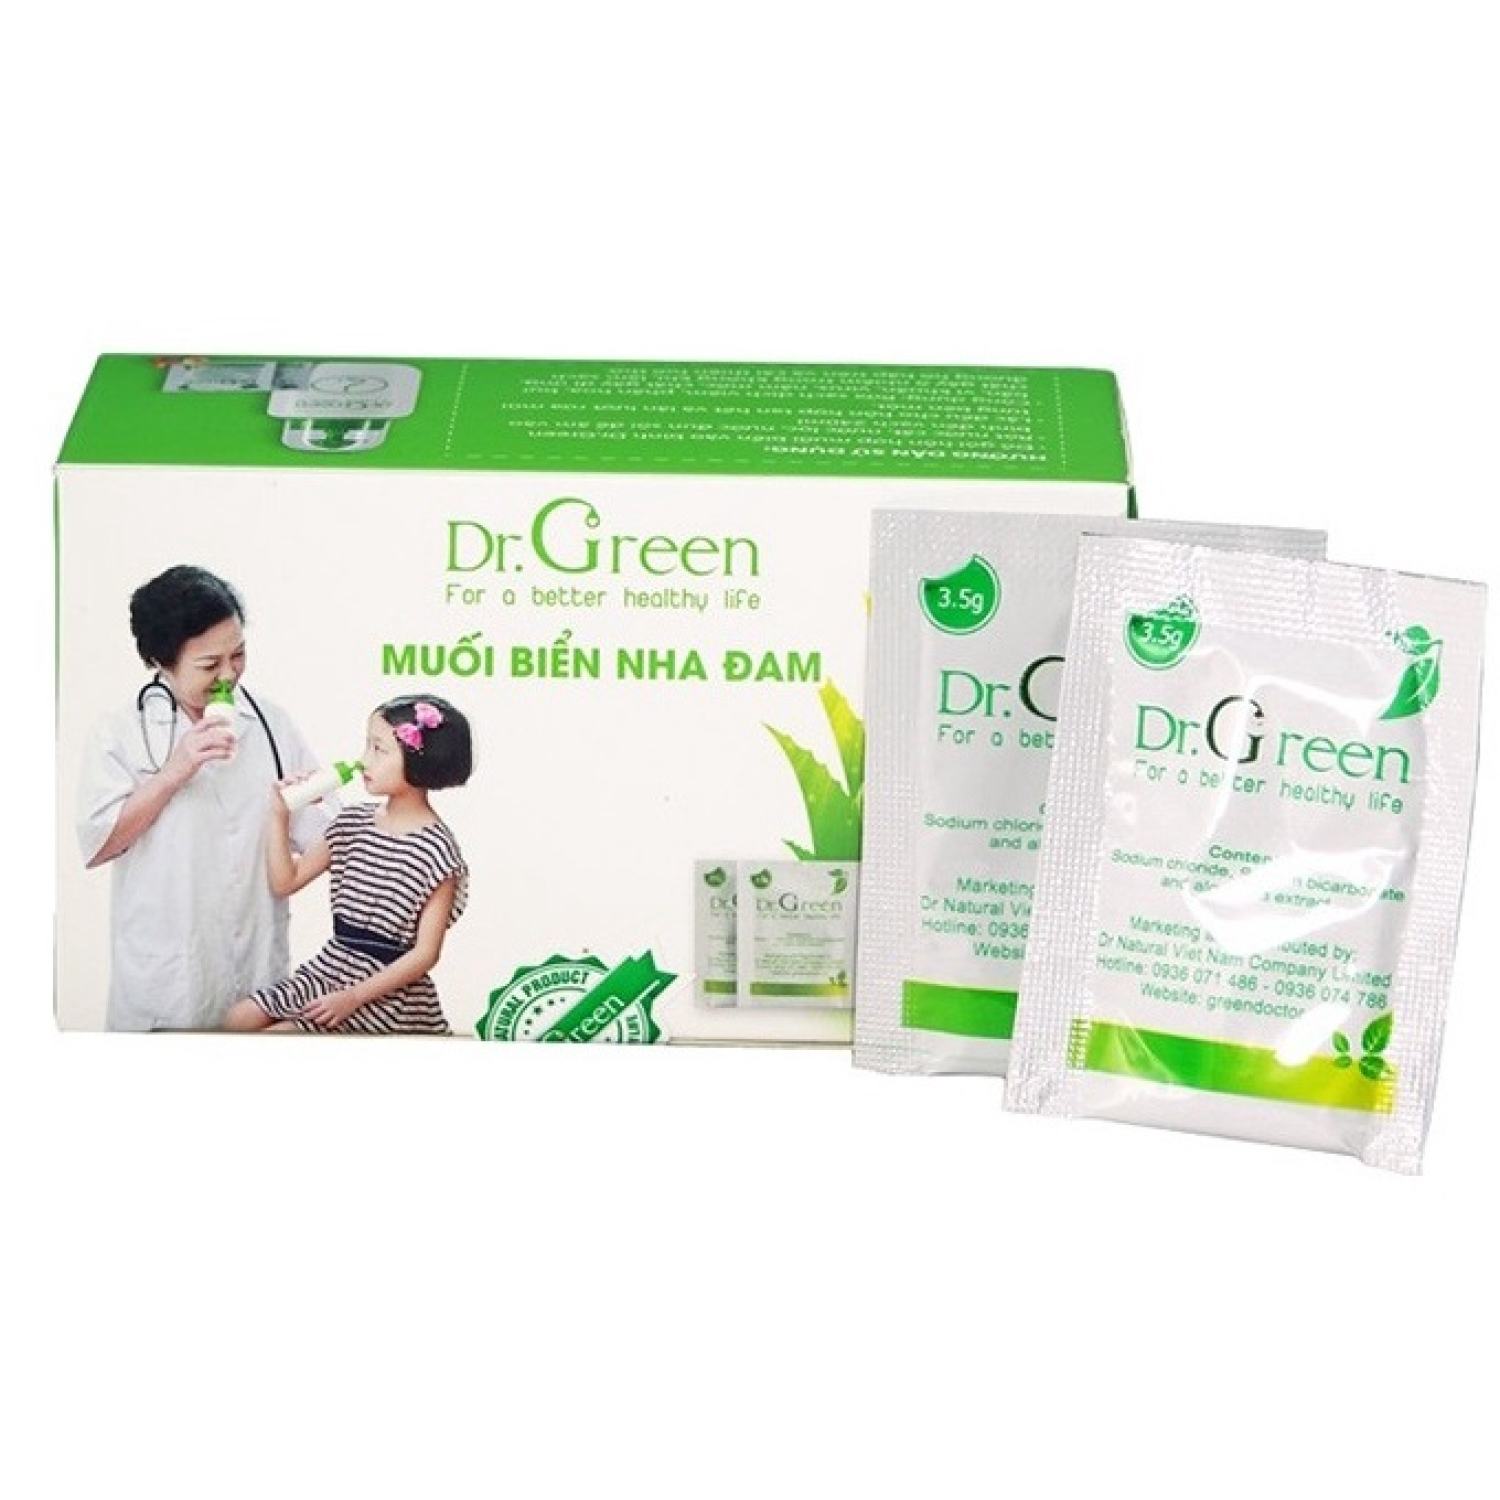 Dr. green aloe vera extract salt Aloe Vera Sea Salt Box 30 packs